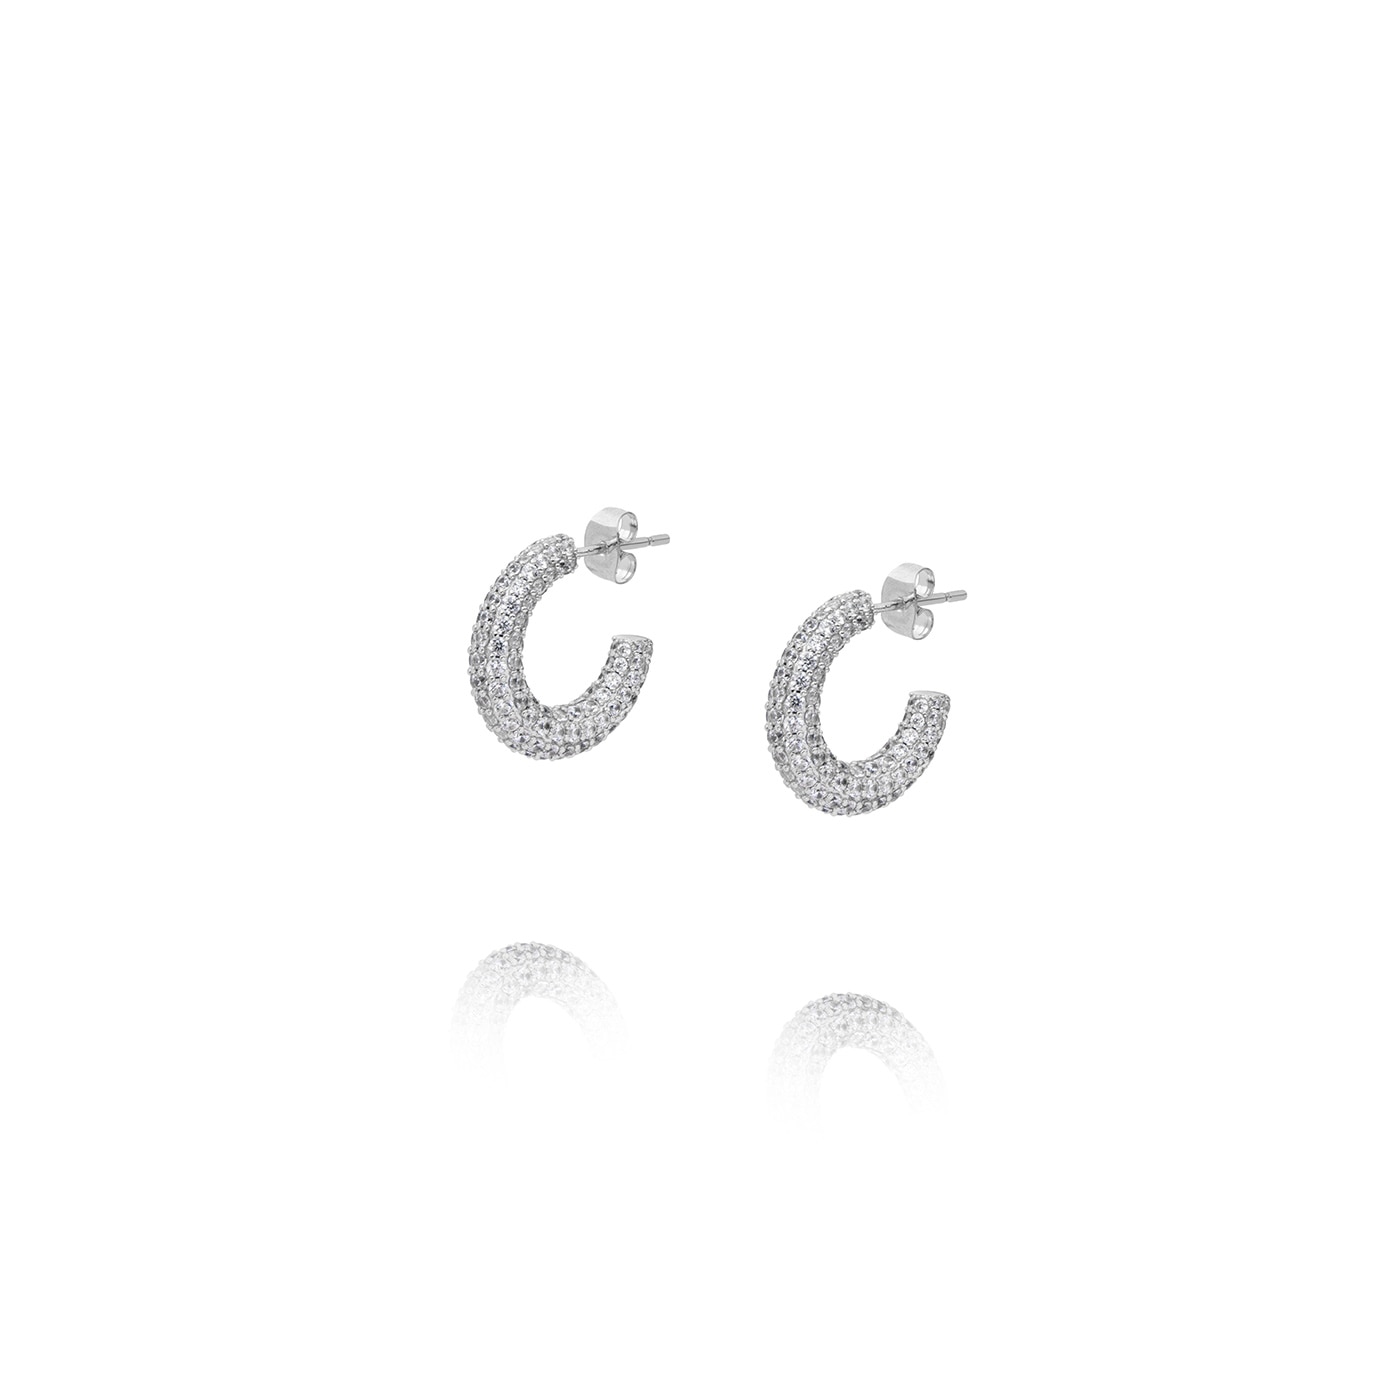 Glasier Earrings Silver/White Large